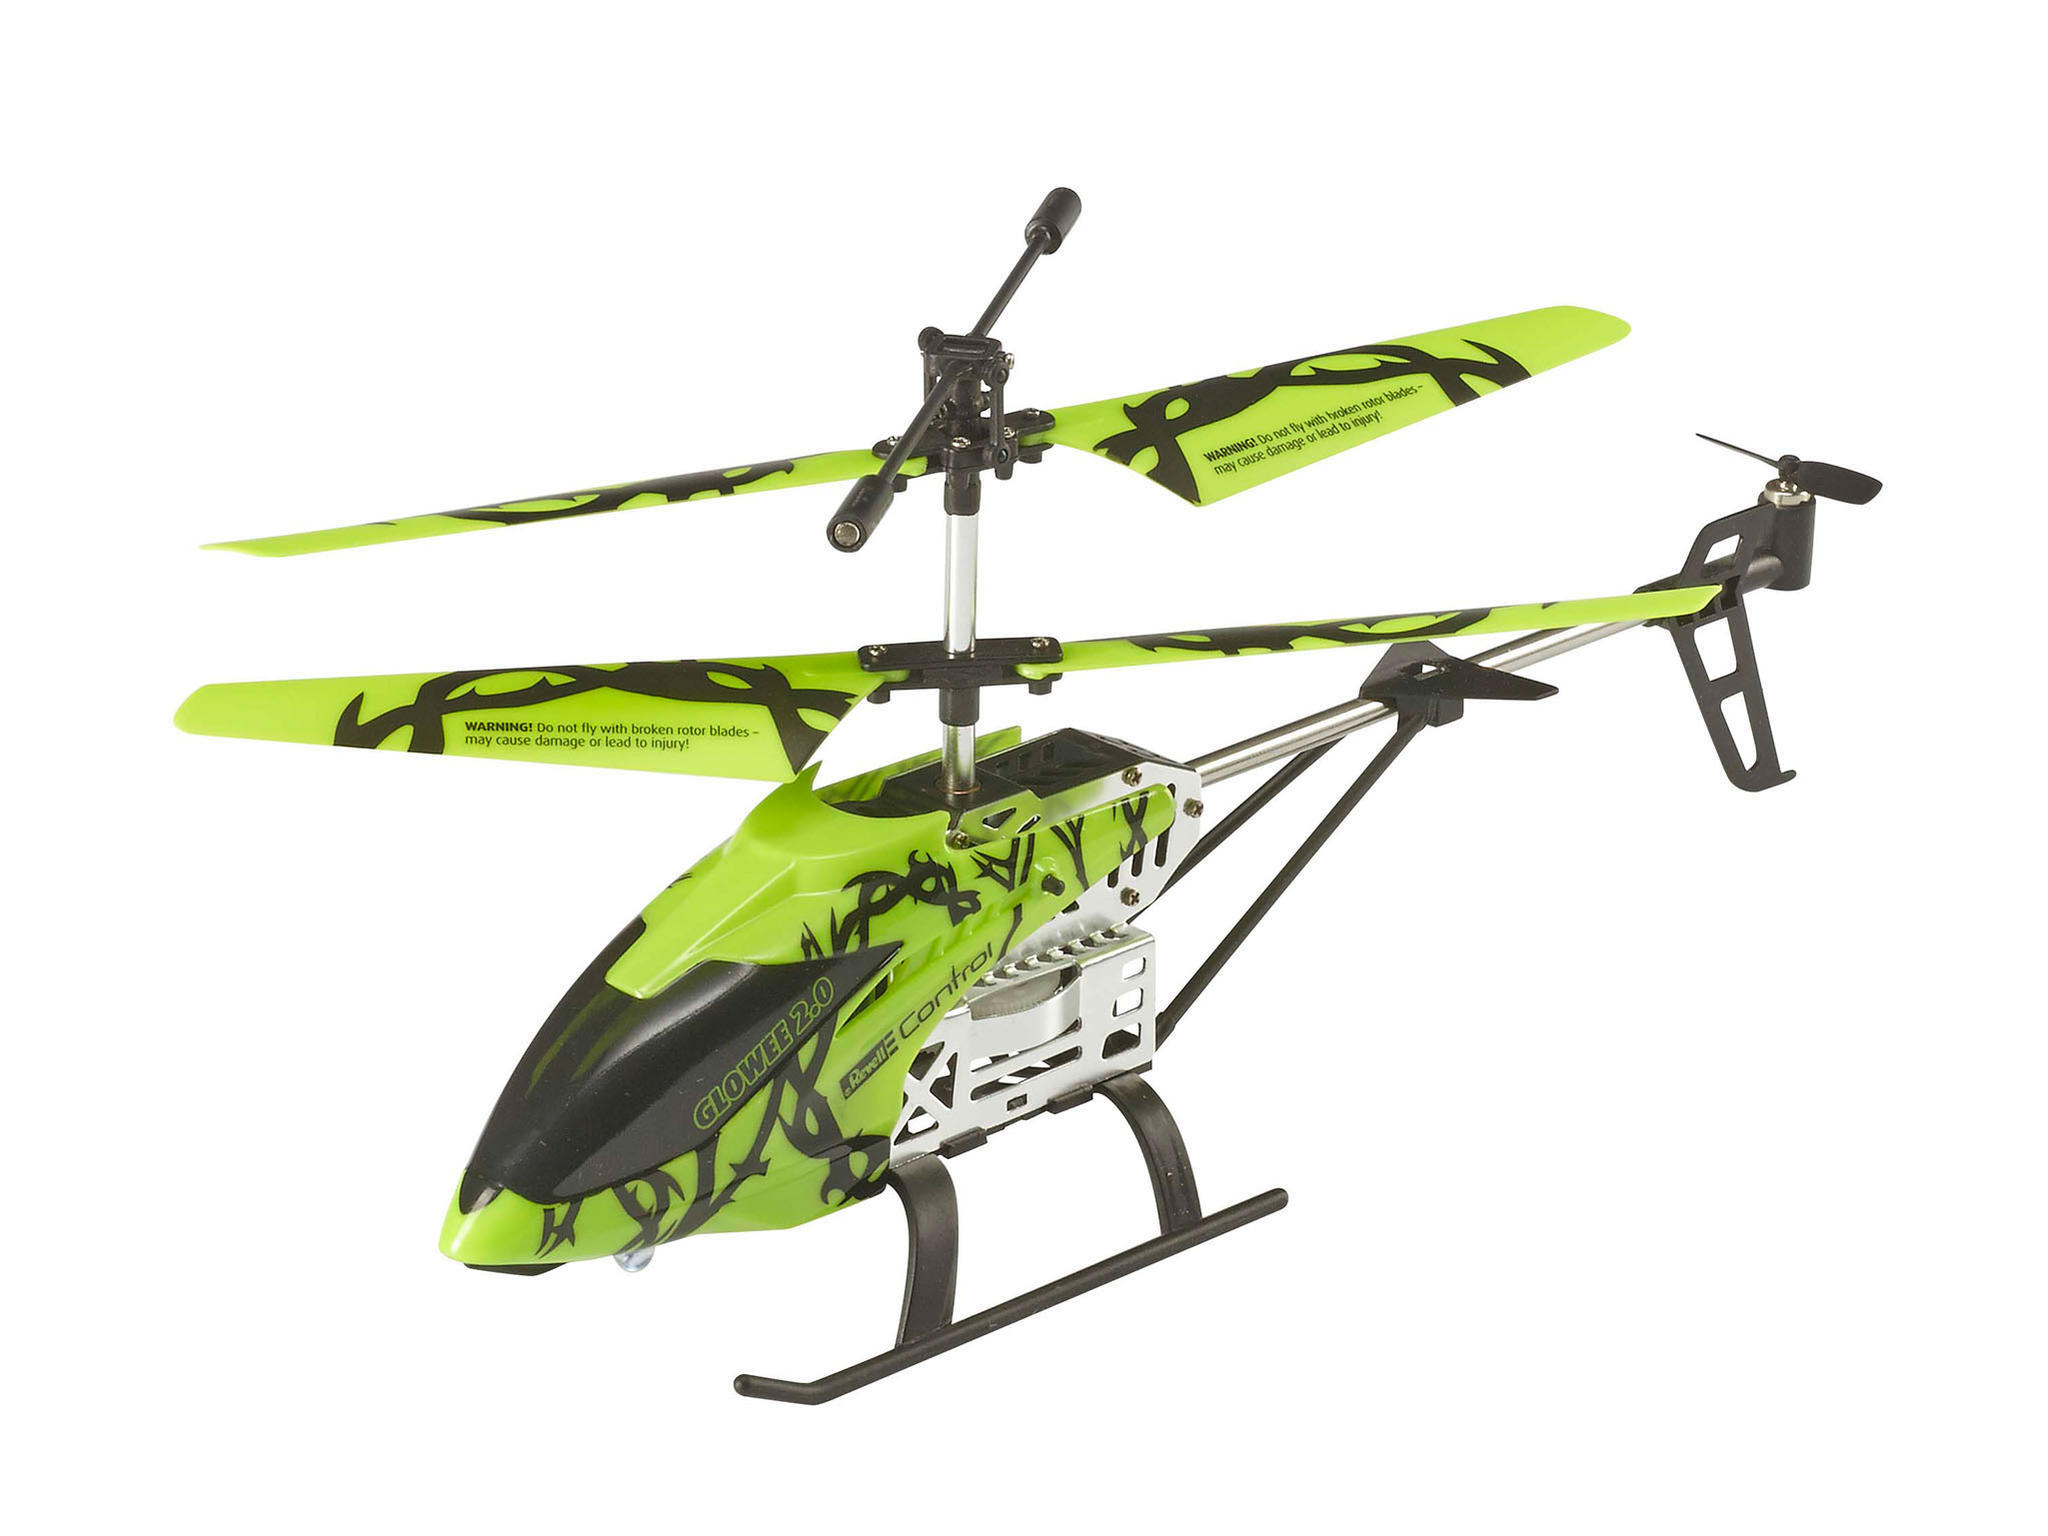 Revell 23940 RC Helikopter "Glowee 2.0" Revell Control Ferngesteuerter Hubschrauber